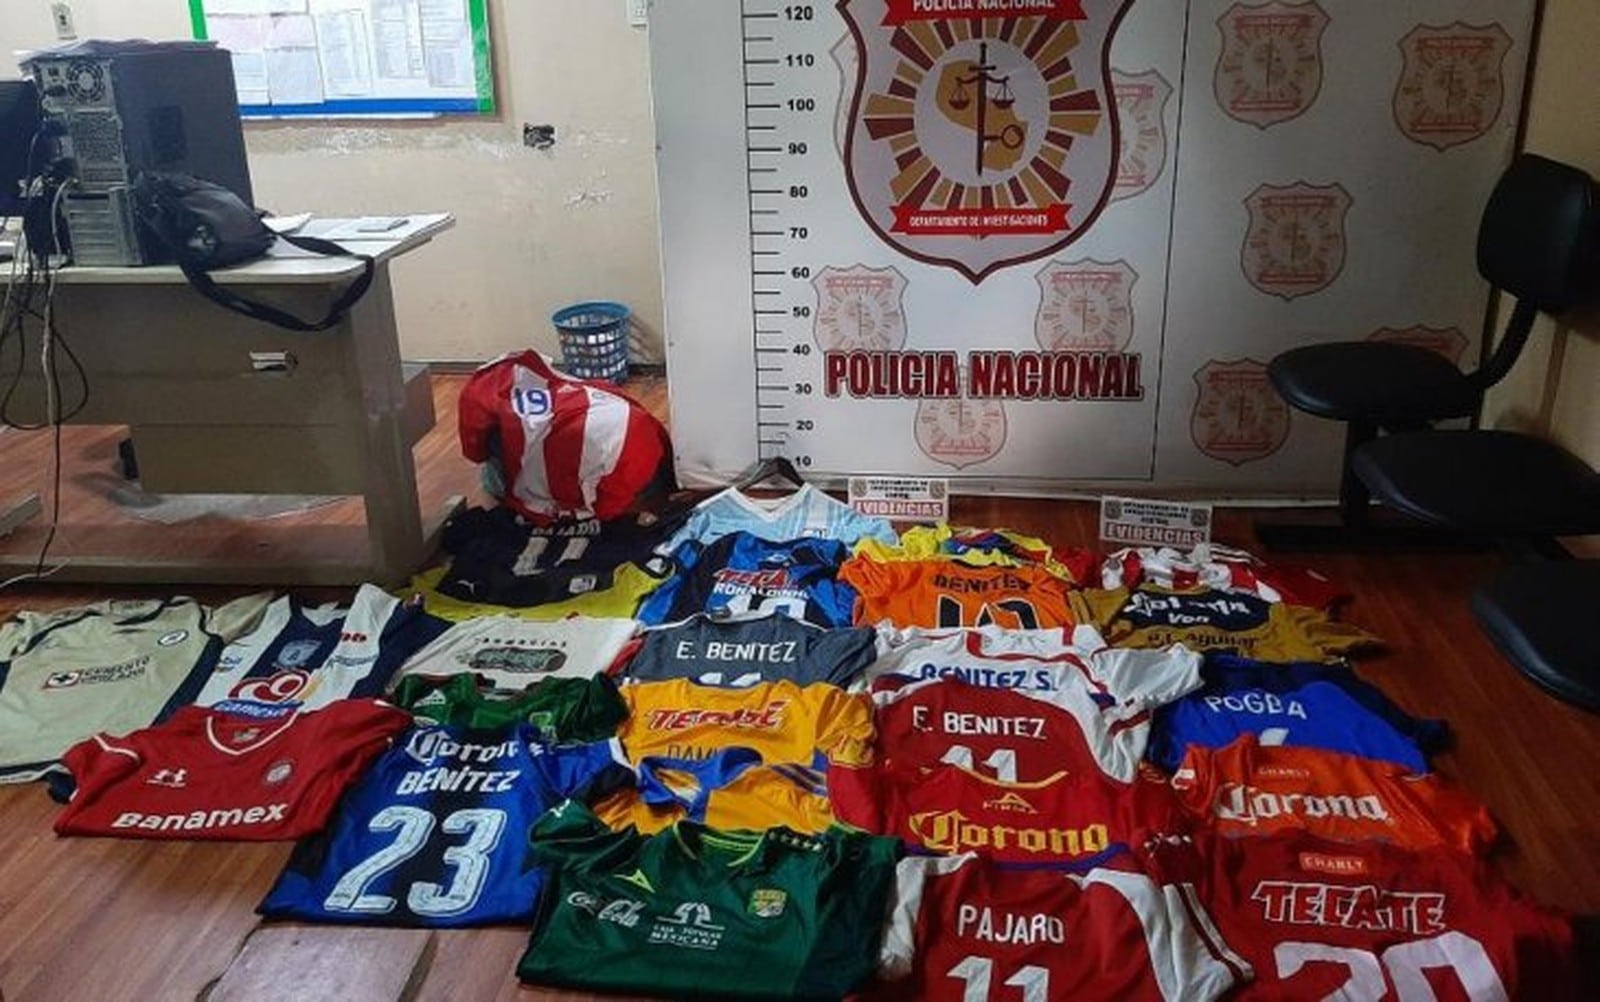 valiosa-colecao-de-camisetas-de-atacante-do-guarani-e-roubada-Futebol-Latino-31-03